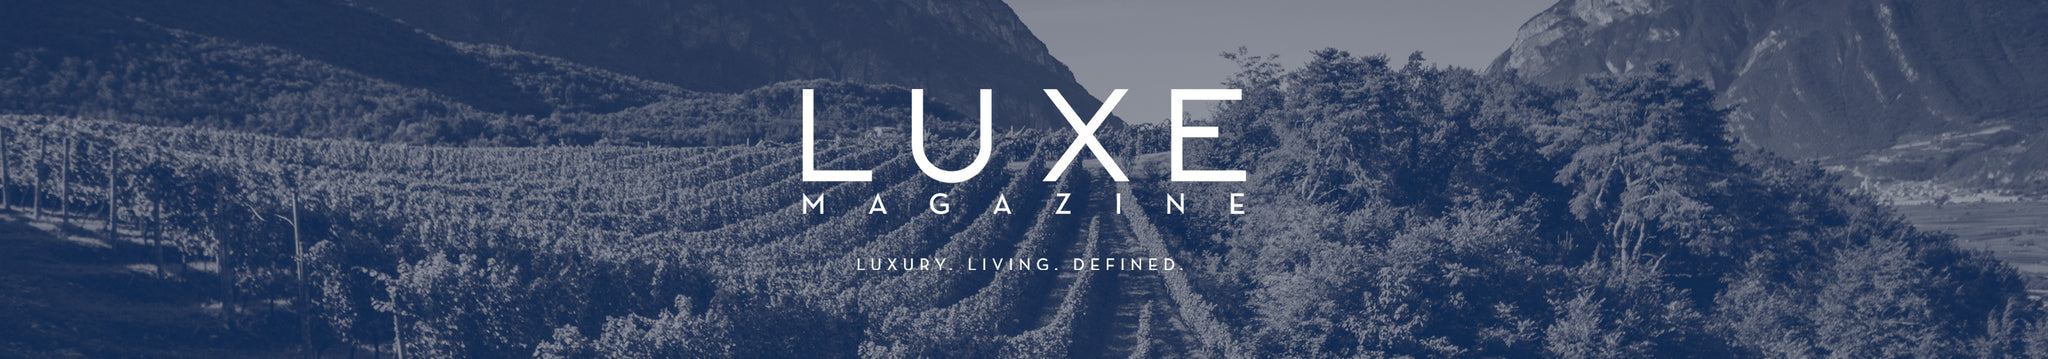 LUXE magazine top picks<br>by Michael Pinkus